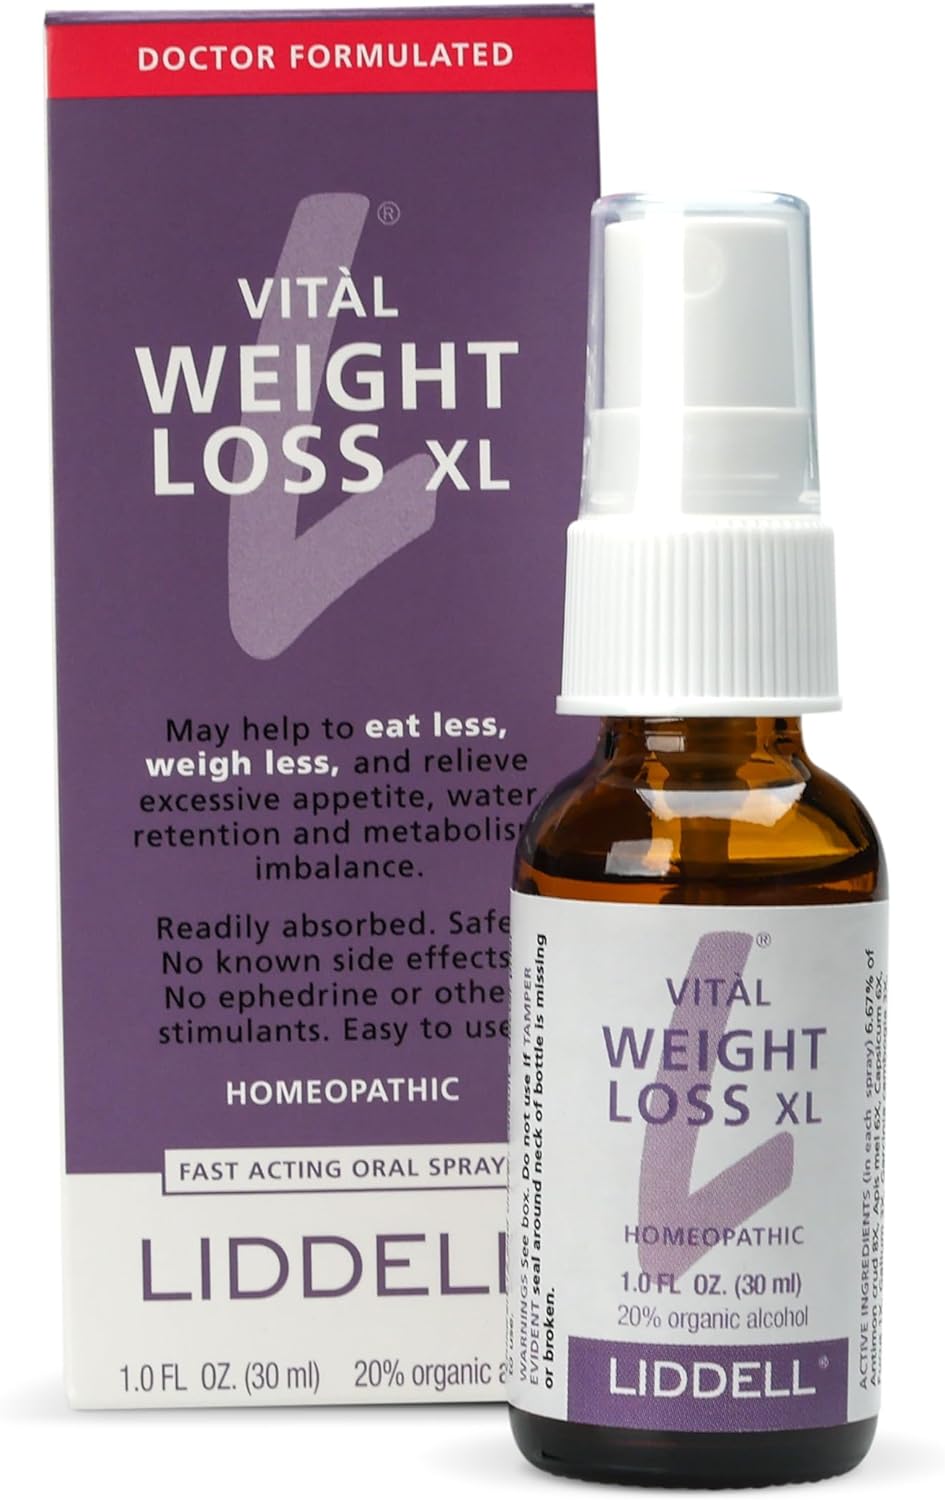 VITL Weight Loss XL Liddell Homeopathic 1 oz Liquid review